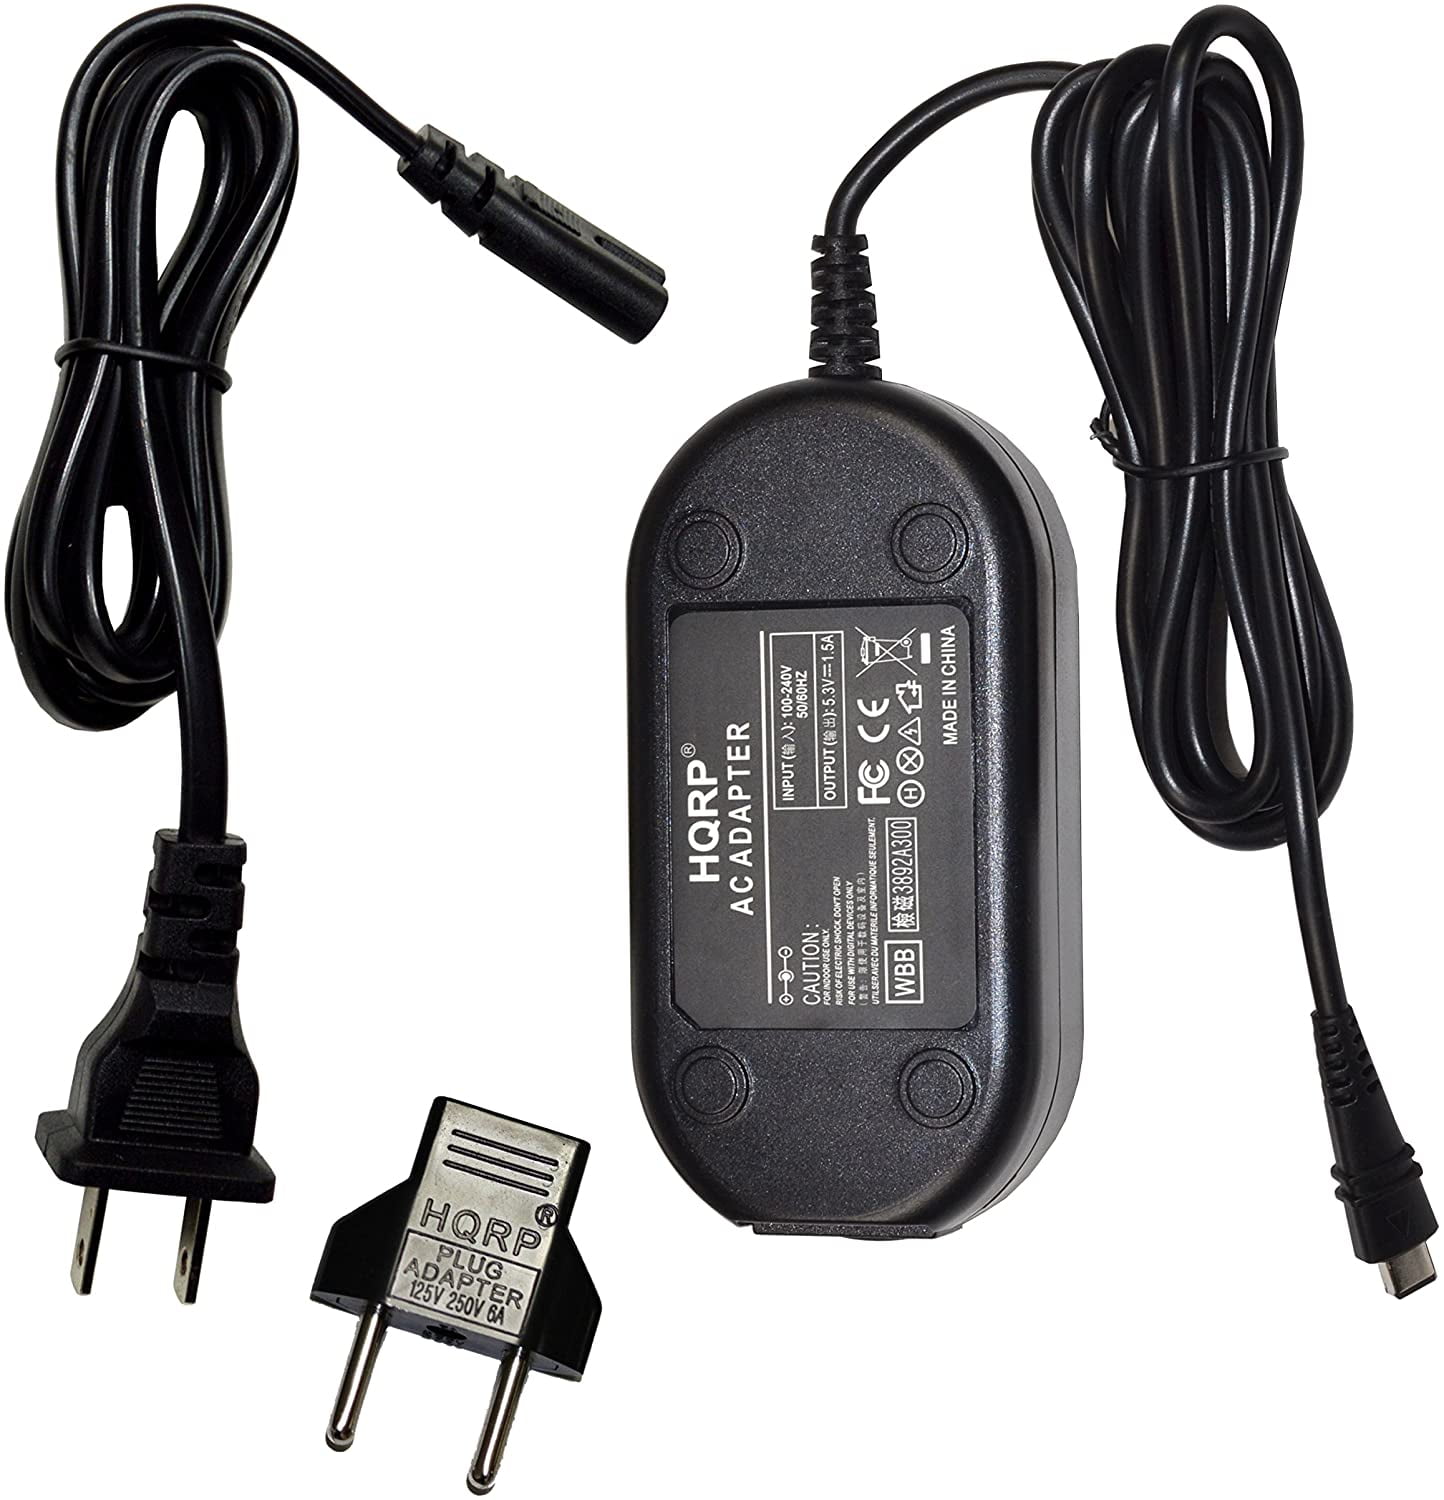 AV Audio VIDEO TV Cable USB Charger Cord For Panasonic Lumix DMC-FZ7 DMC-FZ8